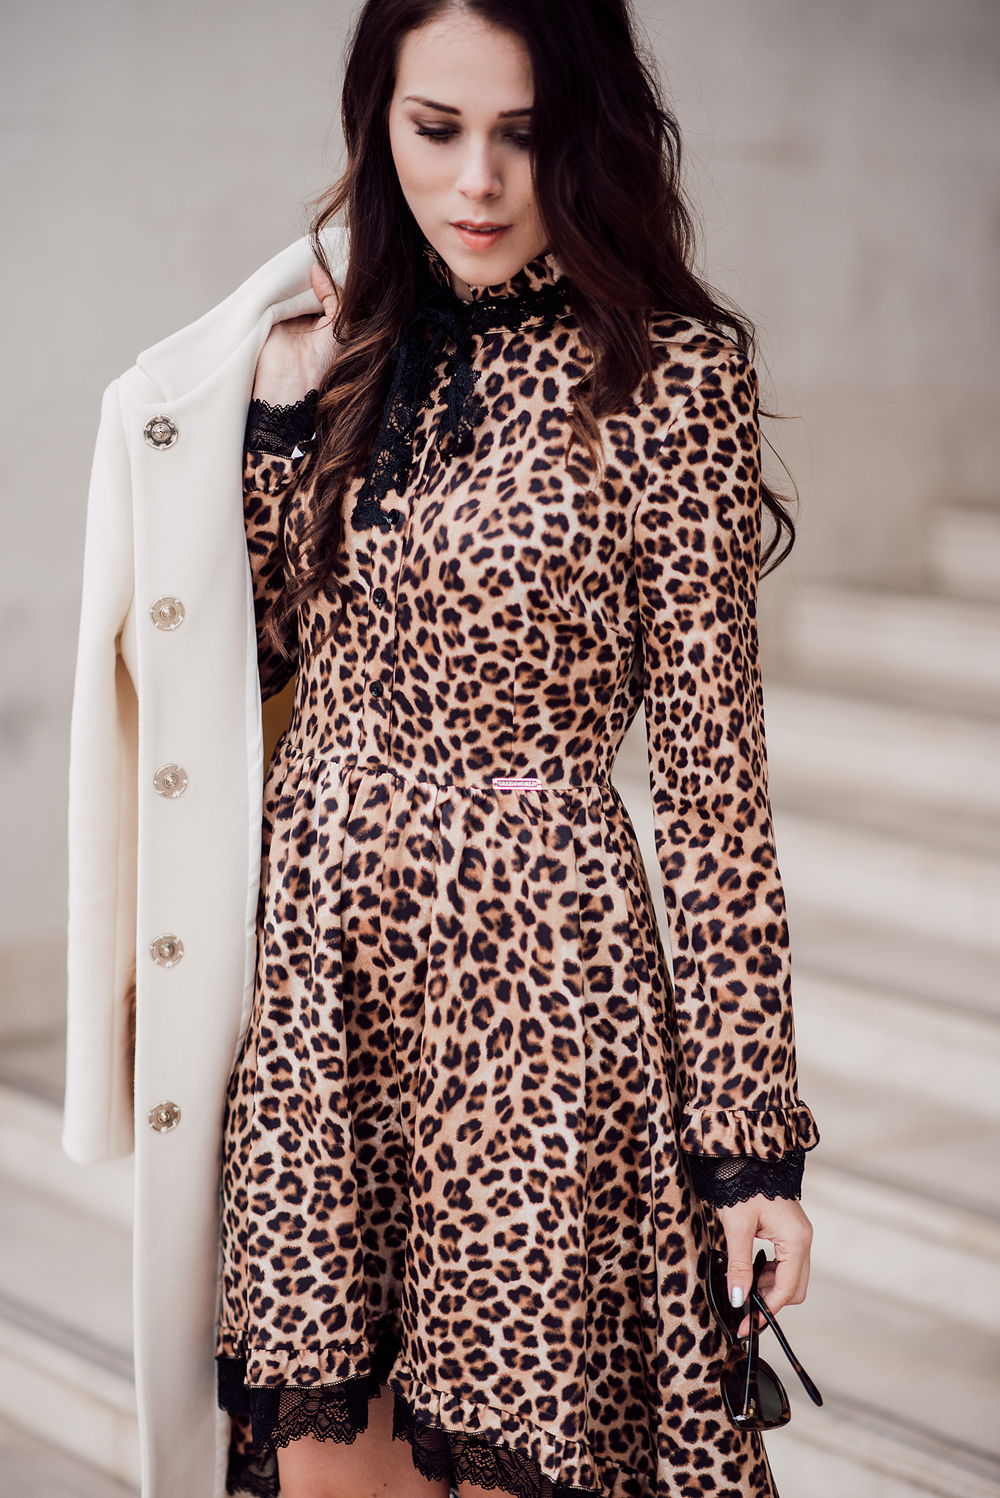 eva-ahacevcic_love-eva_terminal3_ootd_leopard-print_dress_fashion-blogger-12